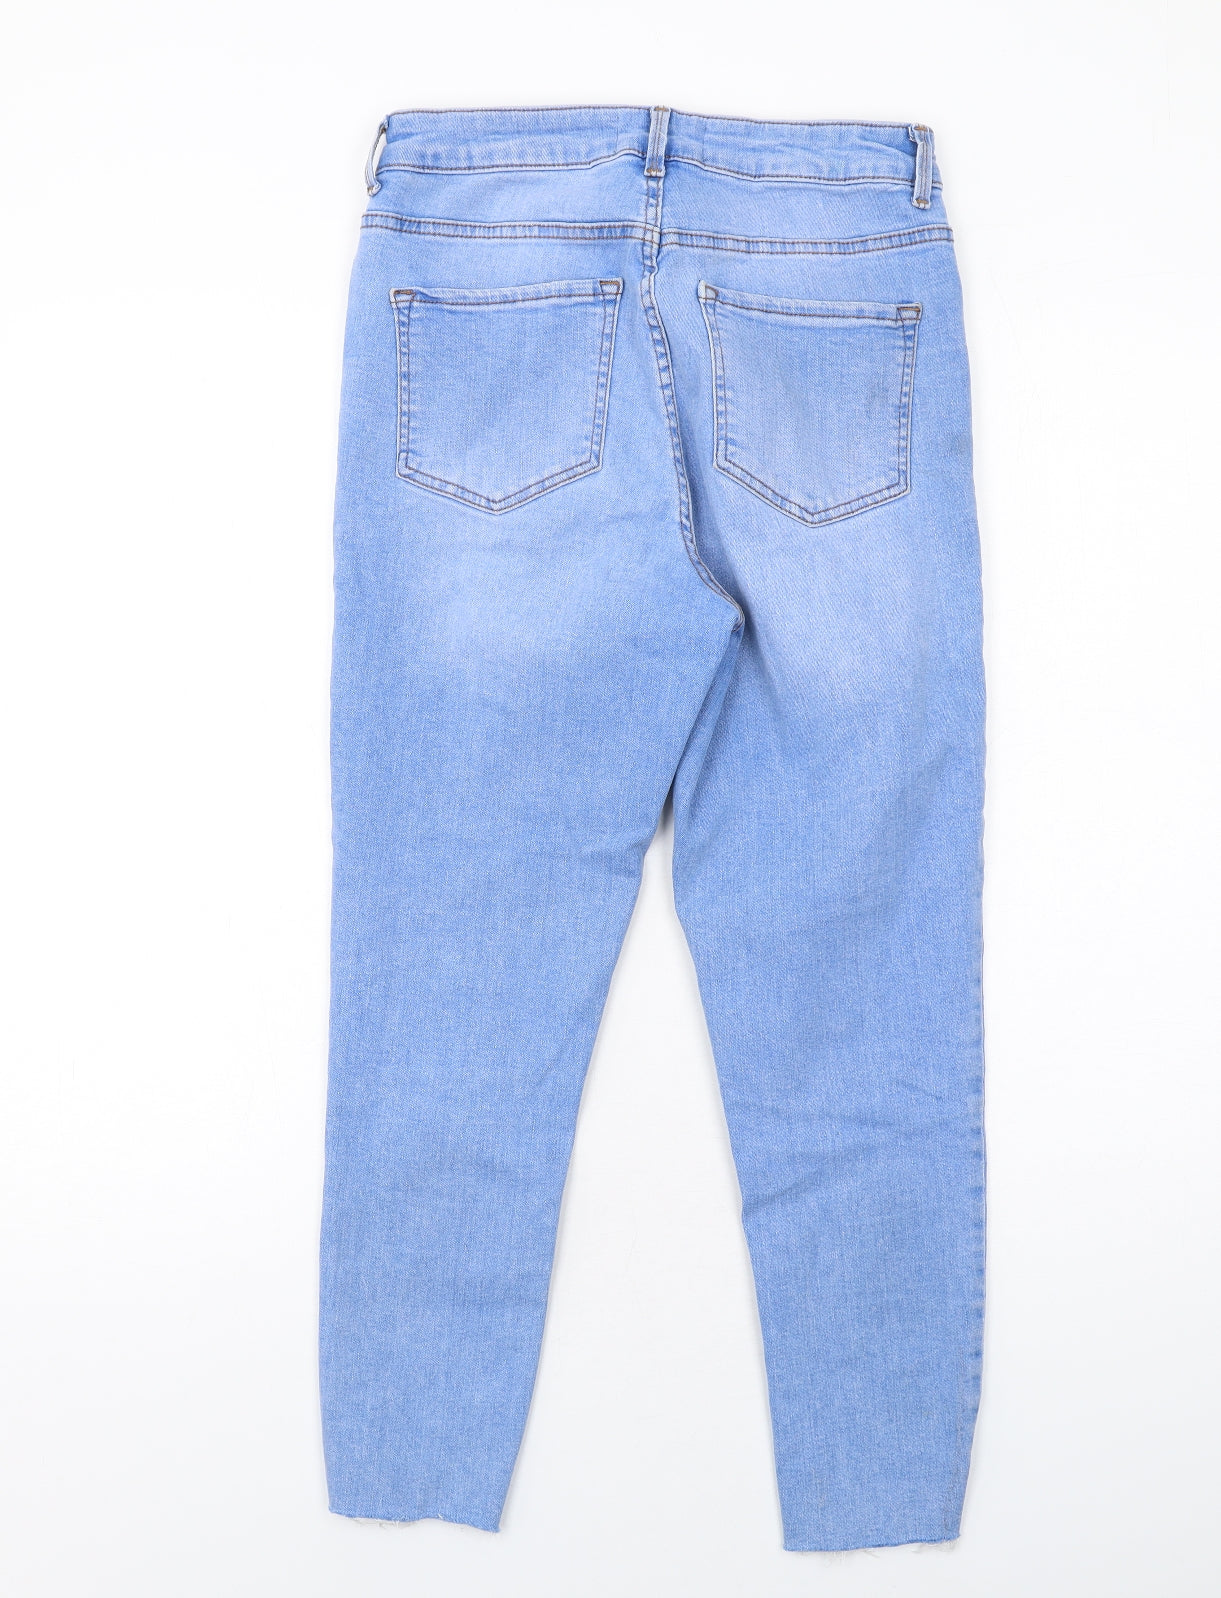 New Look Womens Blue Cotton Skinny Jeans Size 10 L27 in Regular Zip - Frayed Hem